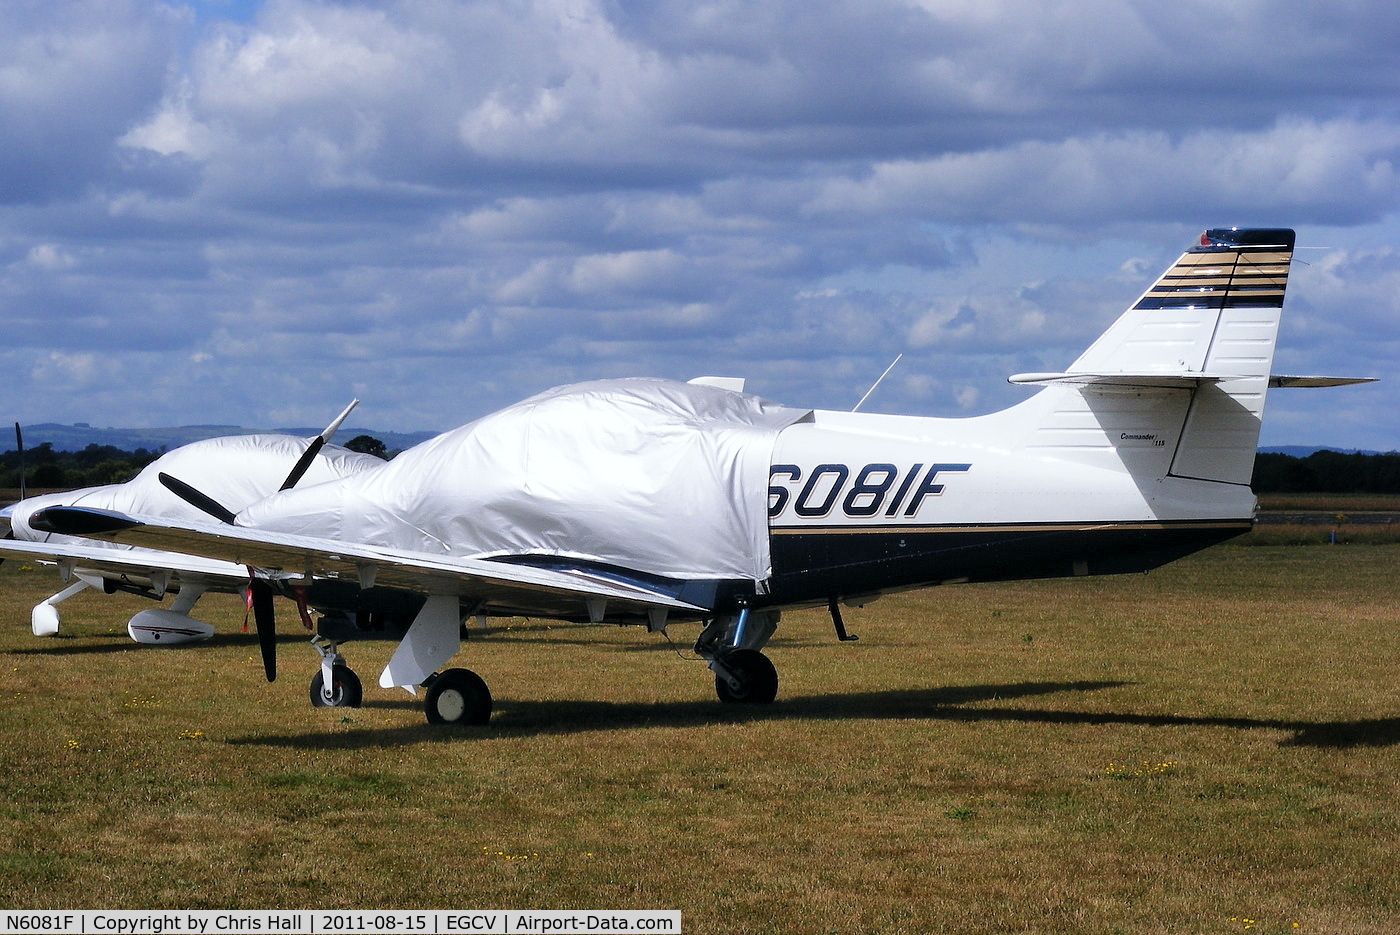 N6081F, 2001 Rockwell Commander 114-B C/N 14681, at Sleap airfield